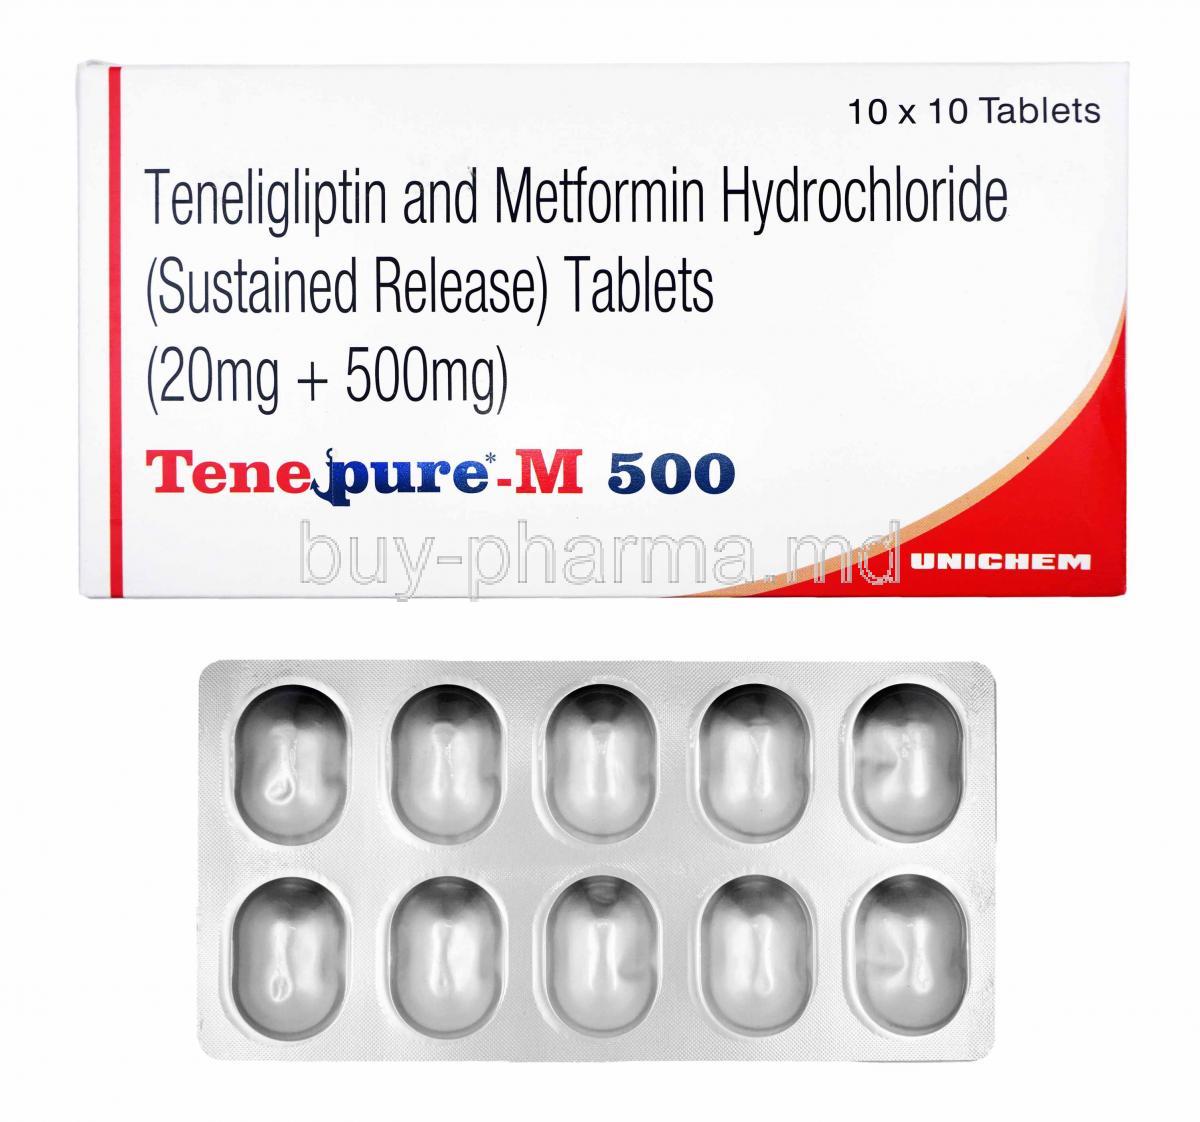 Tenepure-M, Metformin 500mg and Teneligliptin box and tablets